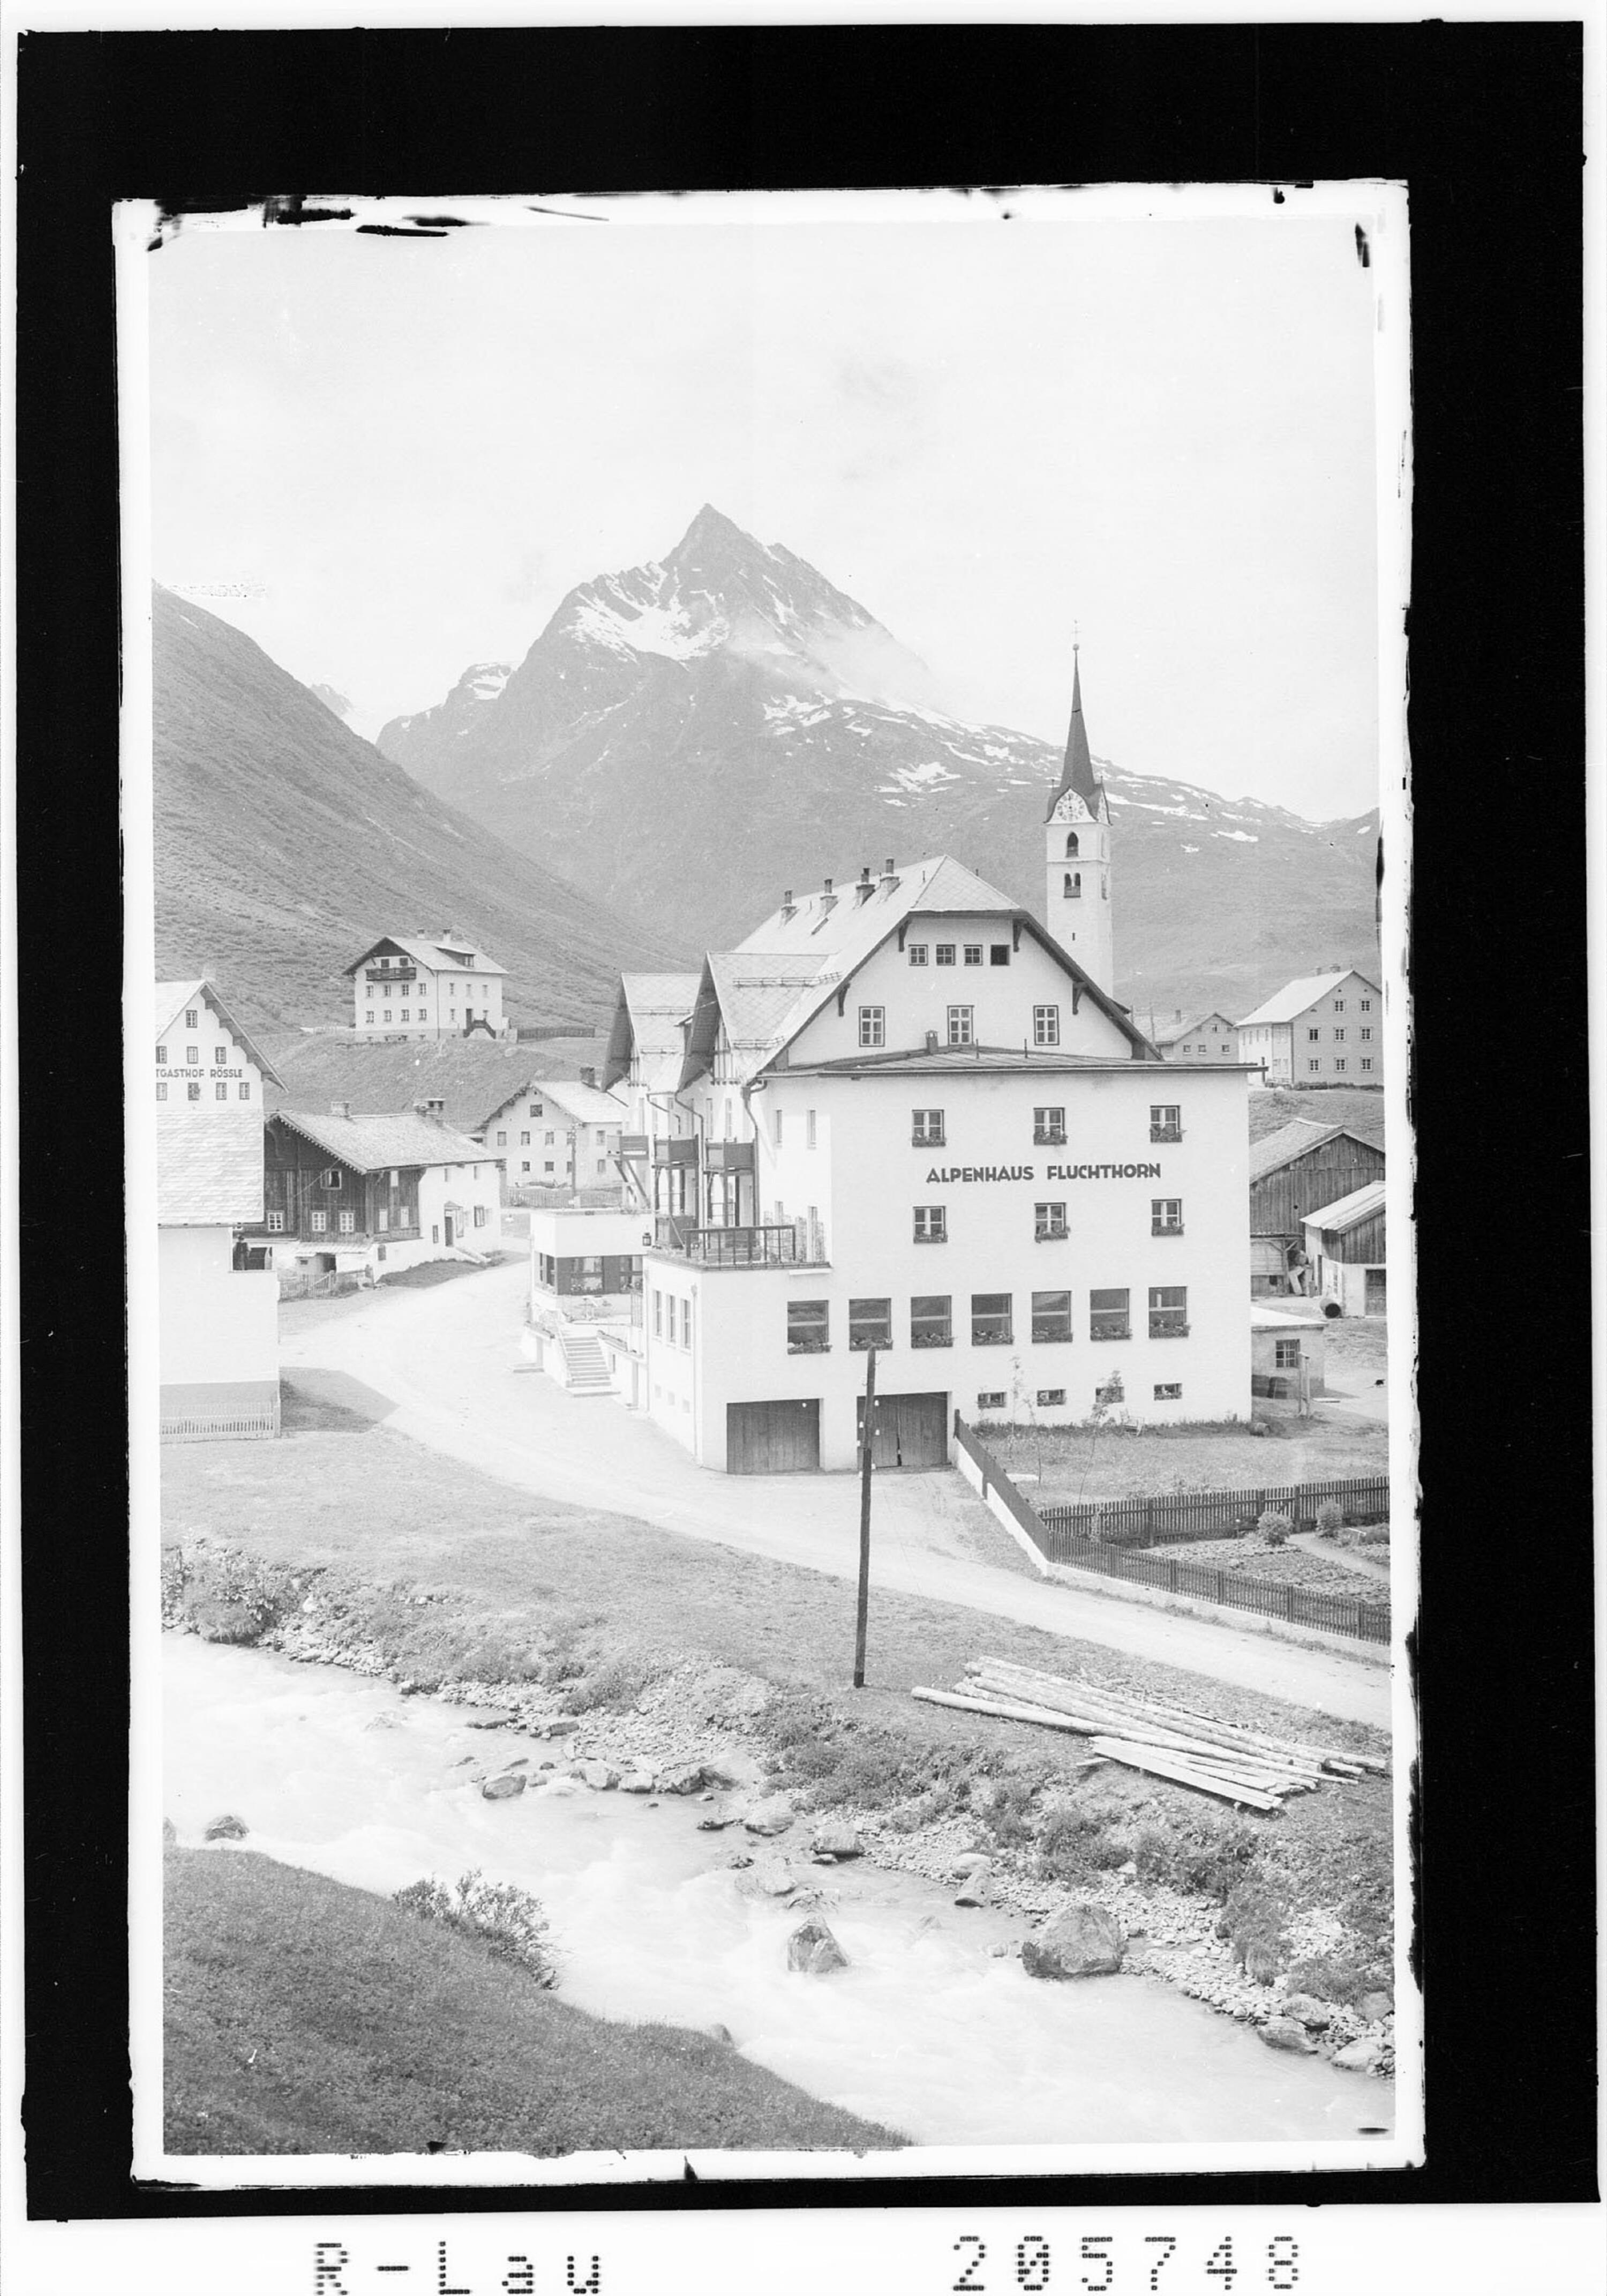 Hotel Fluchthorn / Galtür in Tirol></div>


    <hr>
    <div class=